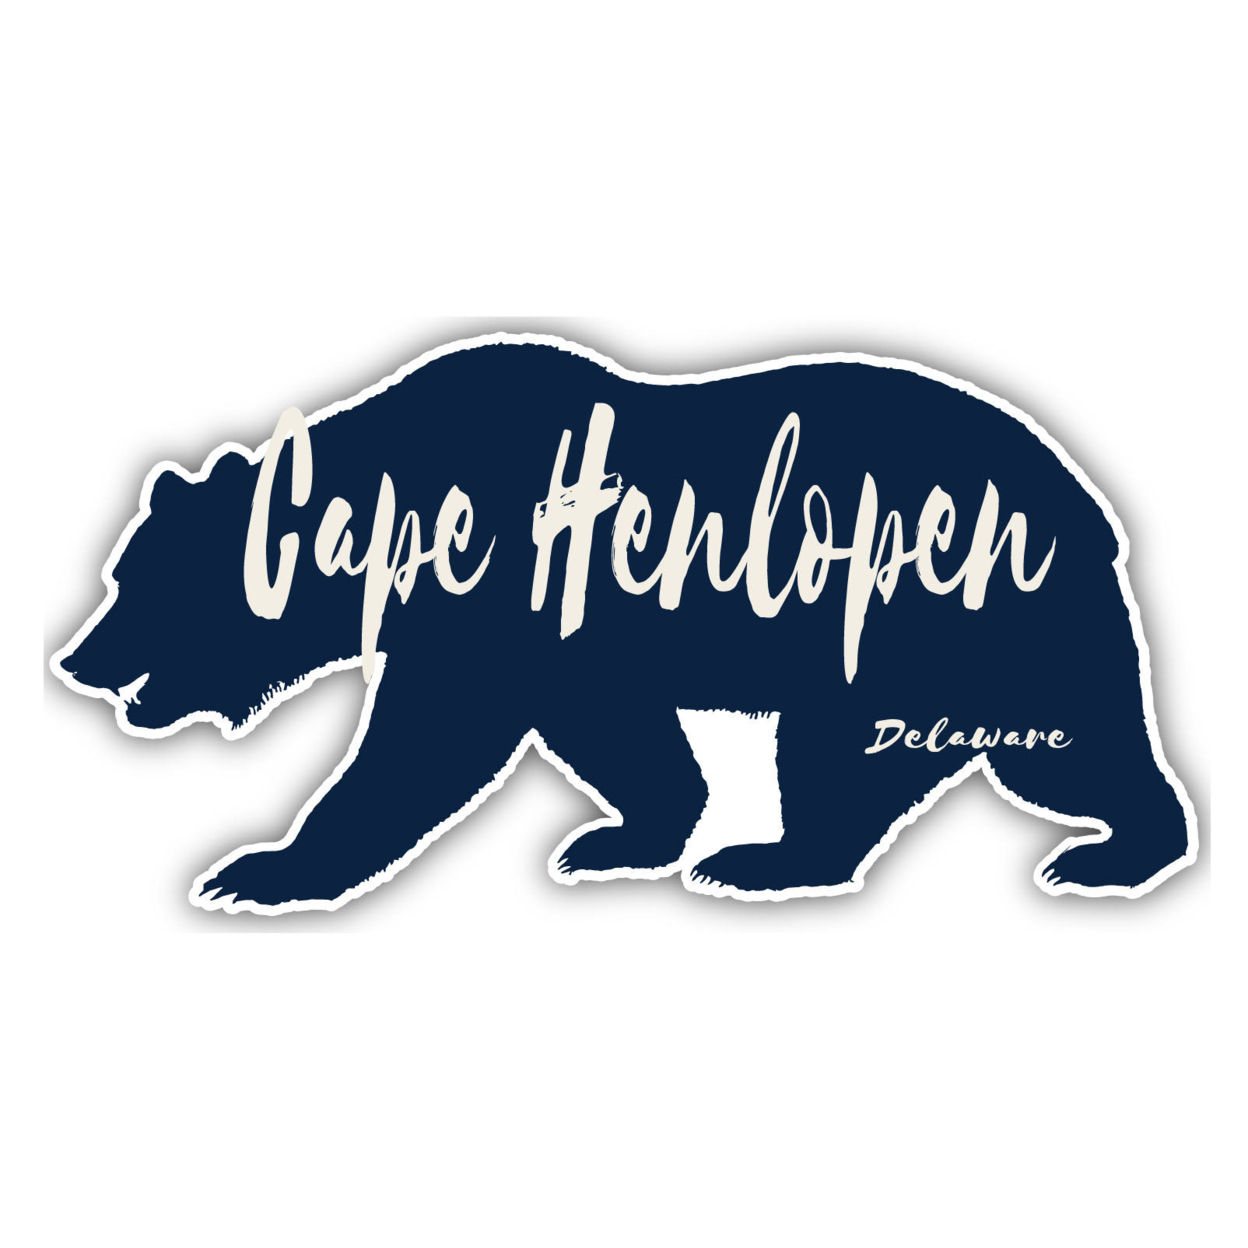 Cape Henlopen Delaware Souvenir Decorative Stickers (Choose Theme And Size) - Single Unit, 10-Inch, Camp Life